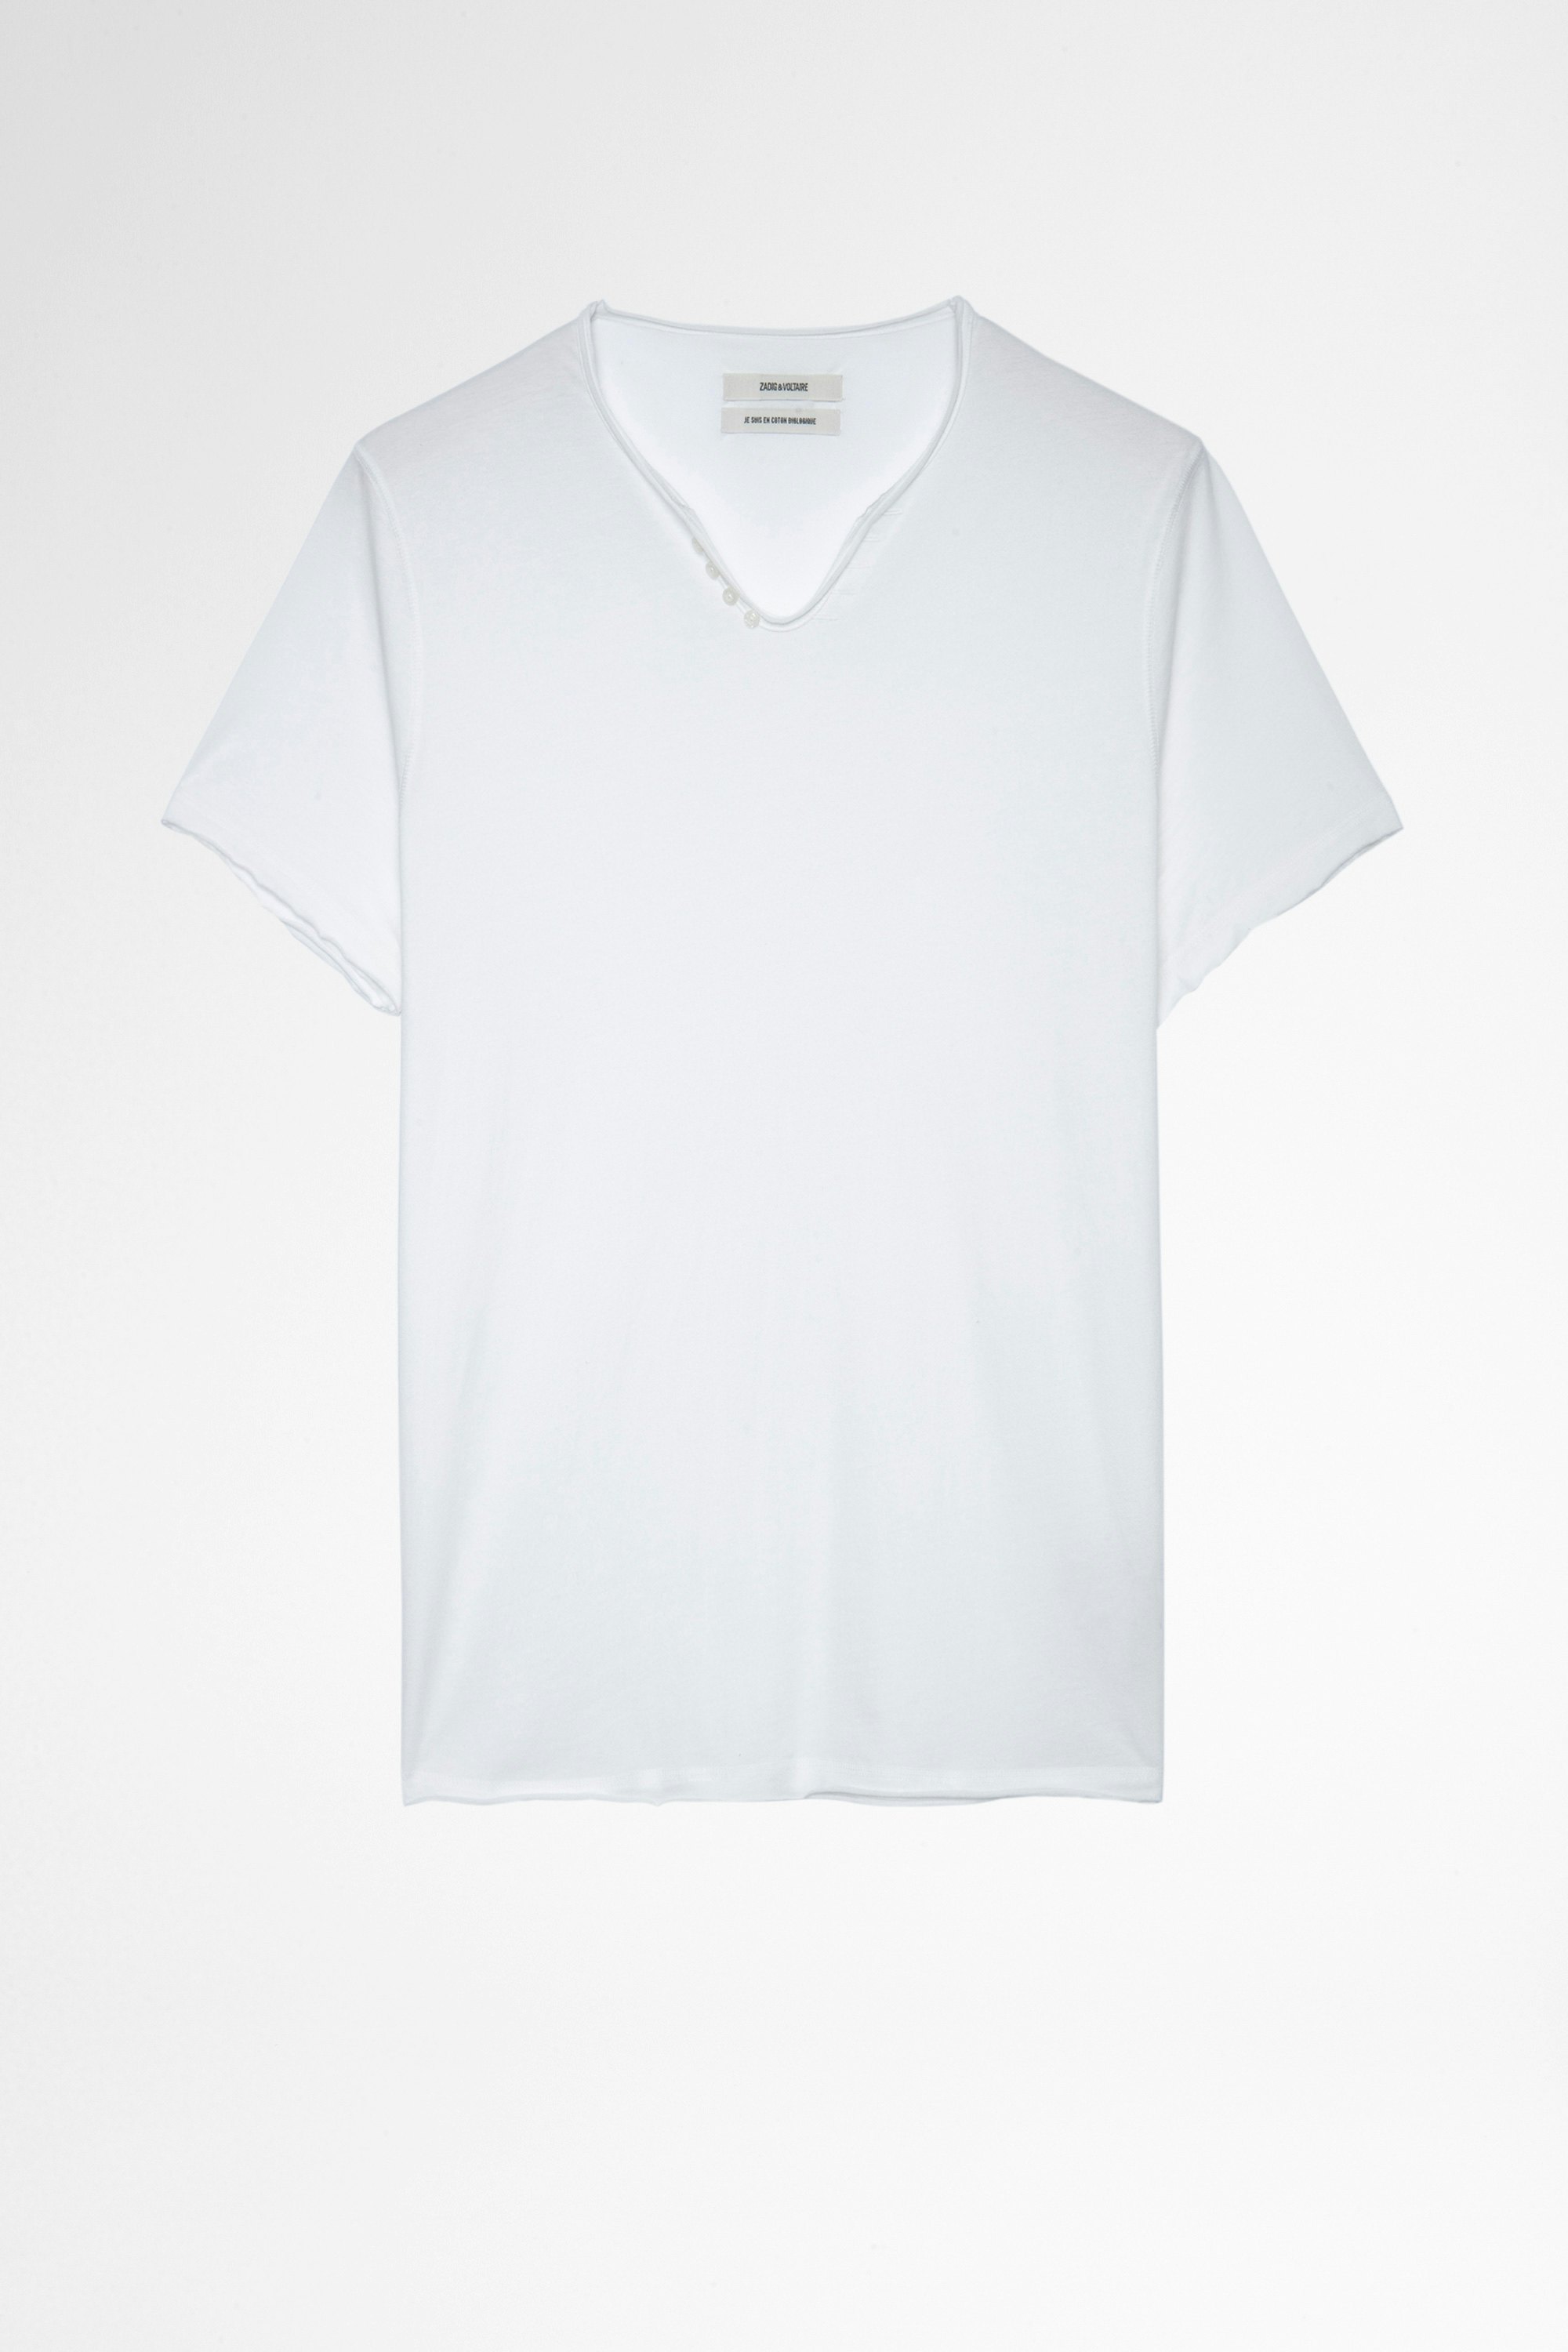 Camiseta Monastir Camiseta blanca para hombre